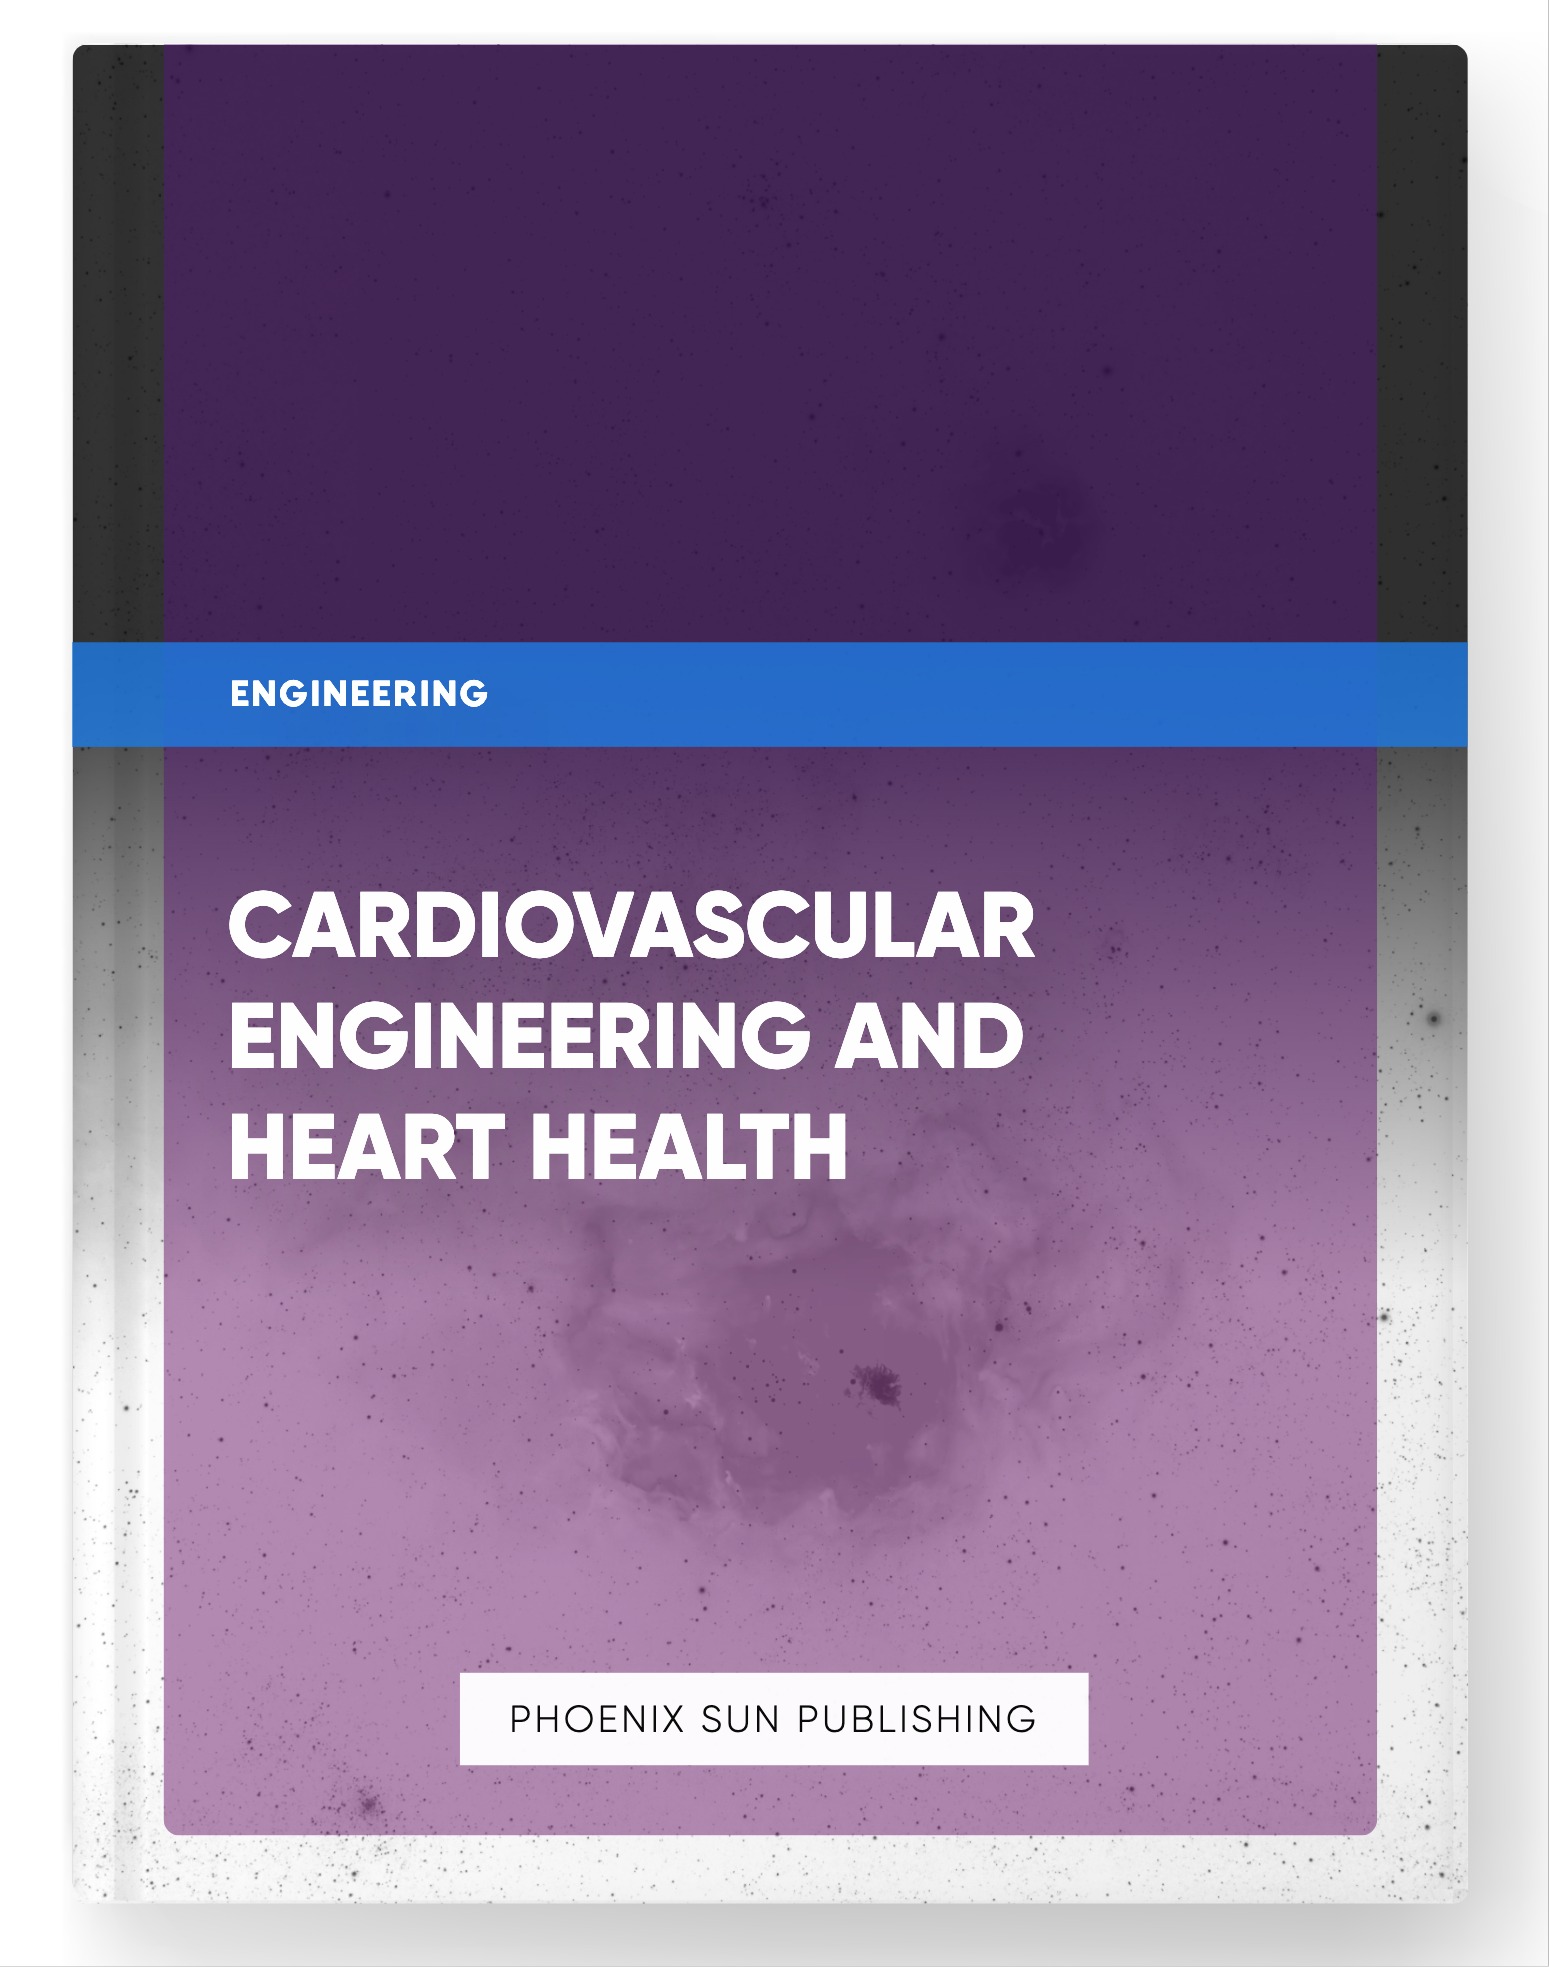 Cardiovascular Engineering and Heart Health